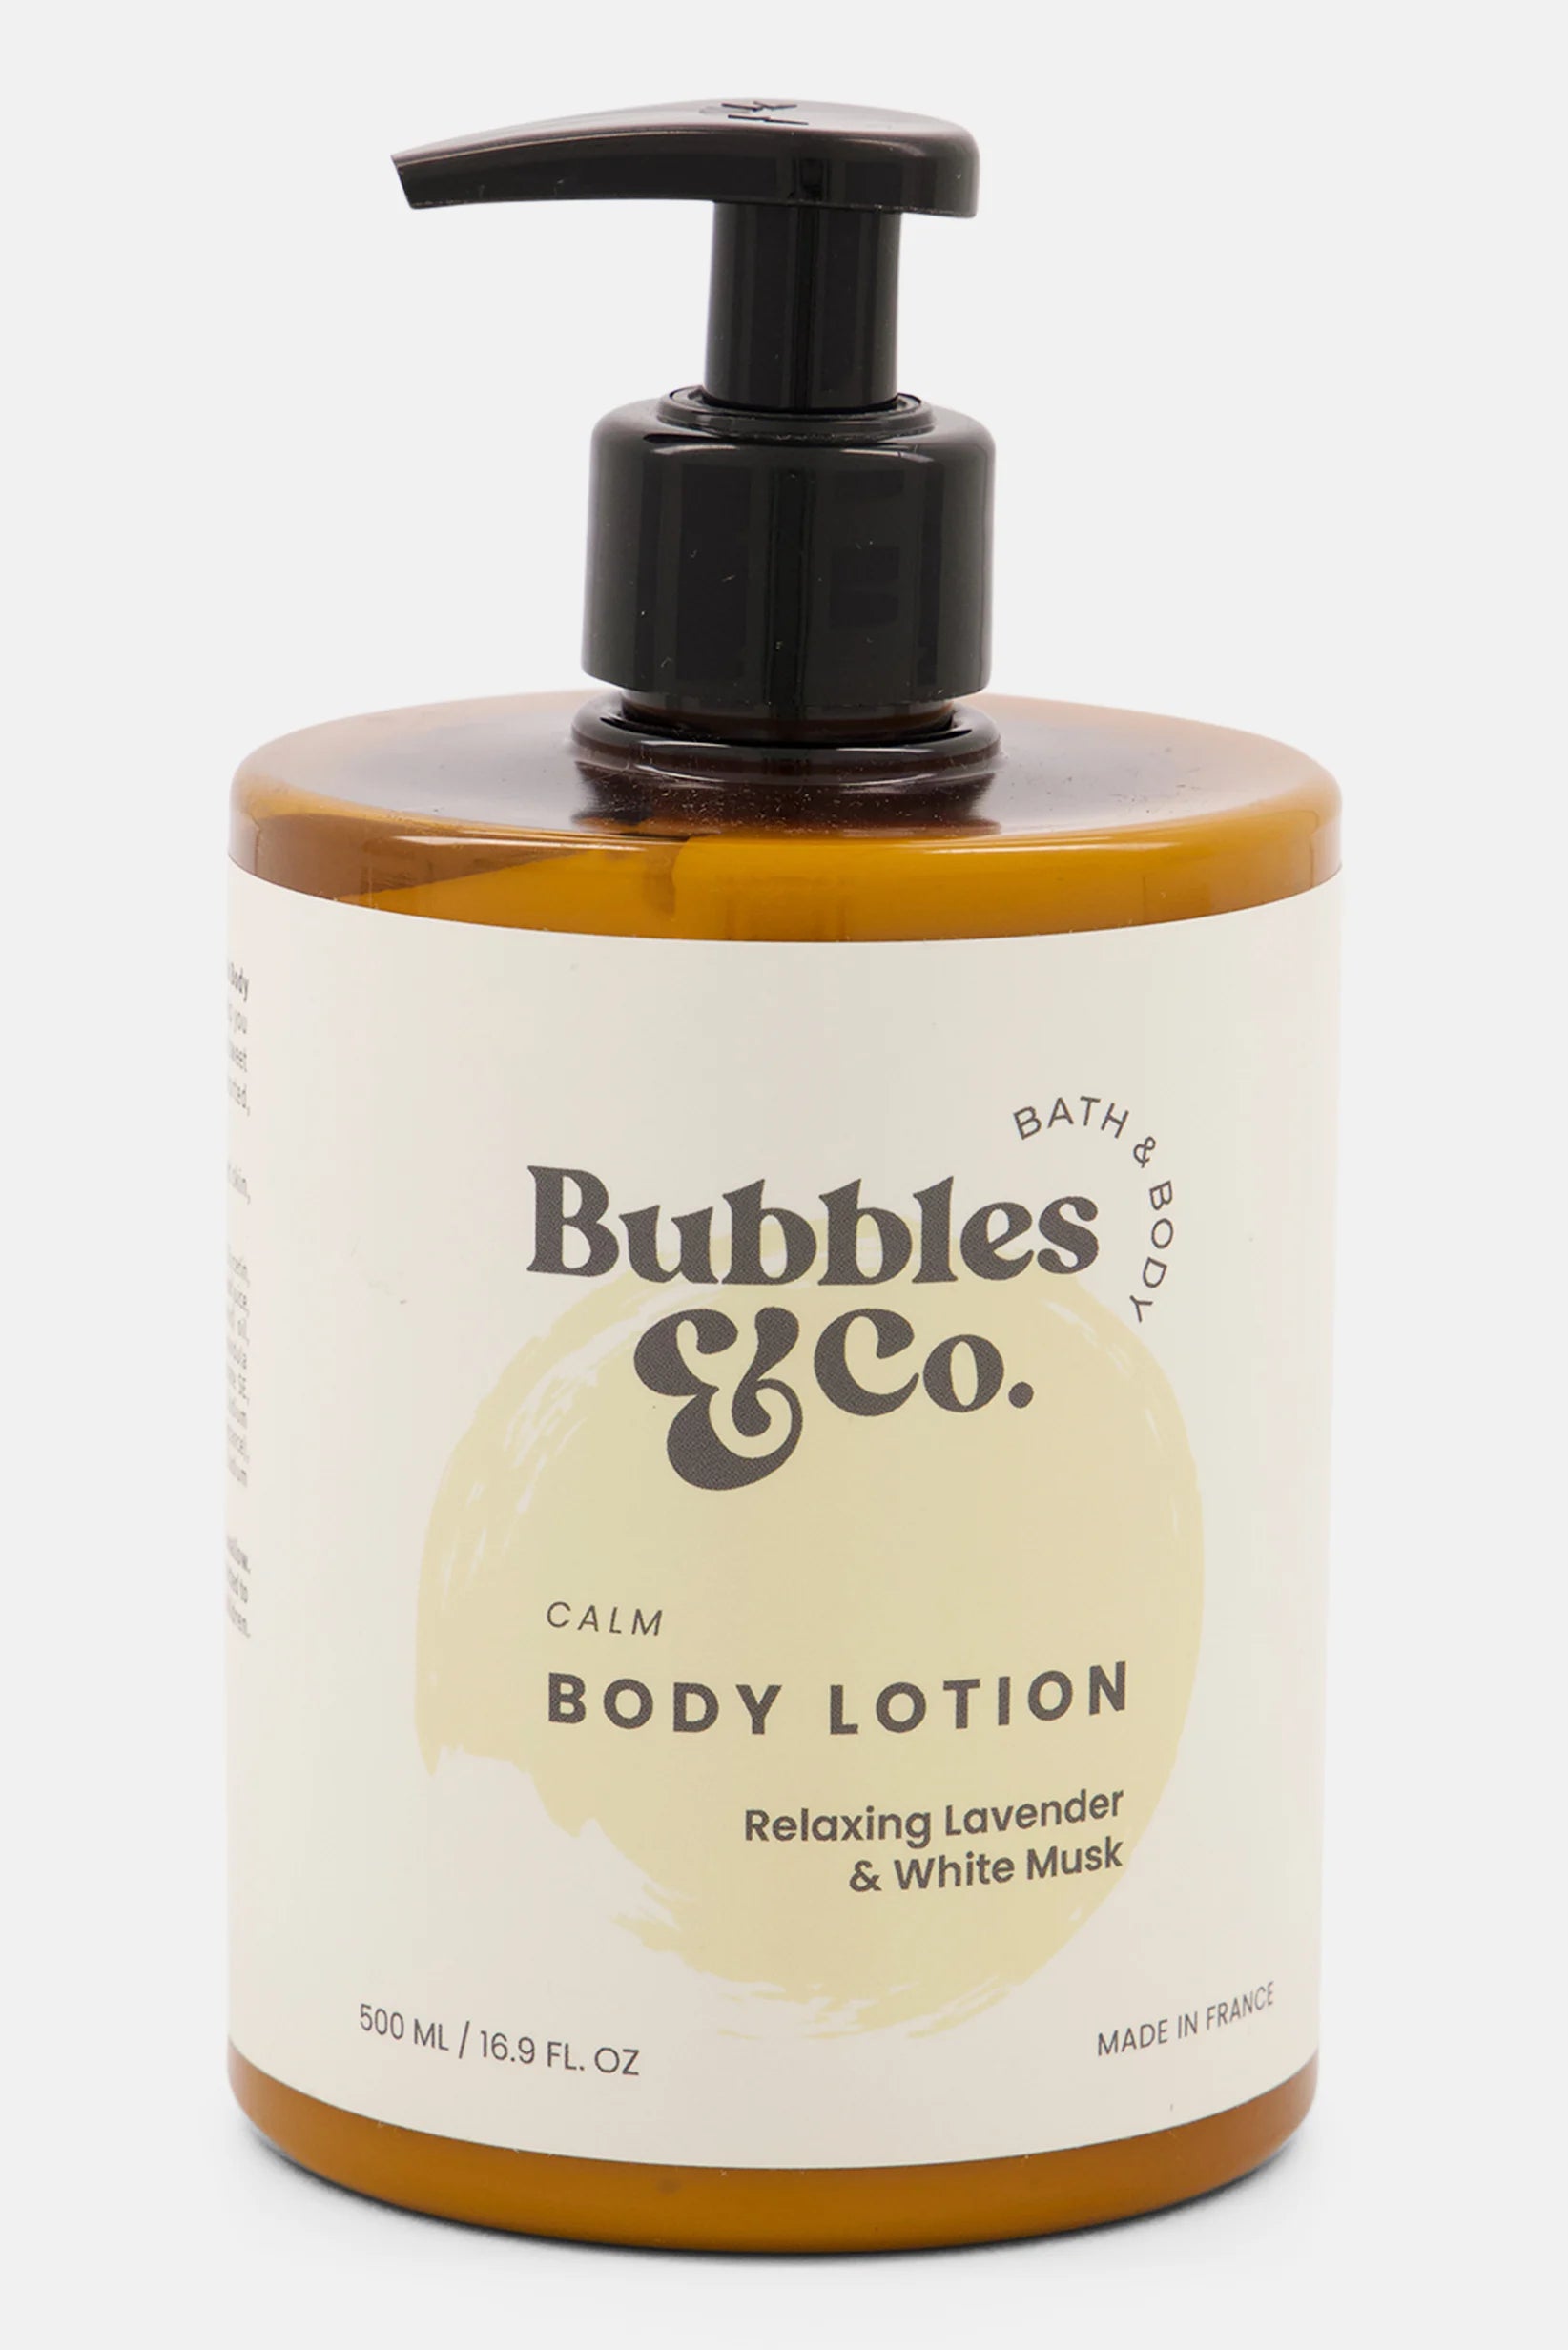 Bubbles & Co Calm Body Lotion